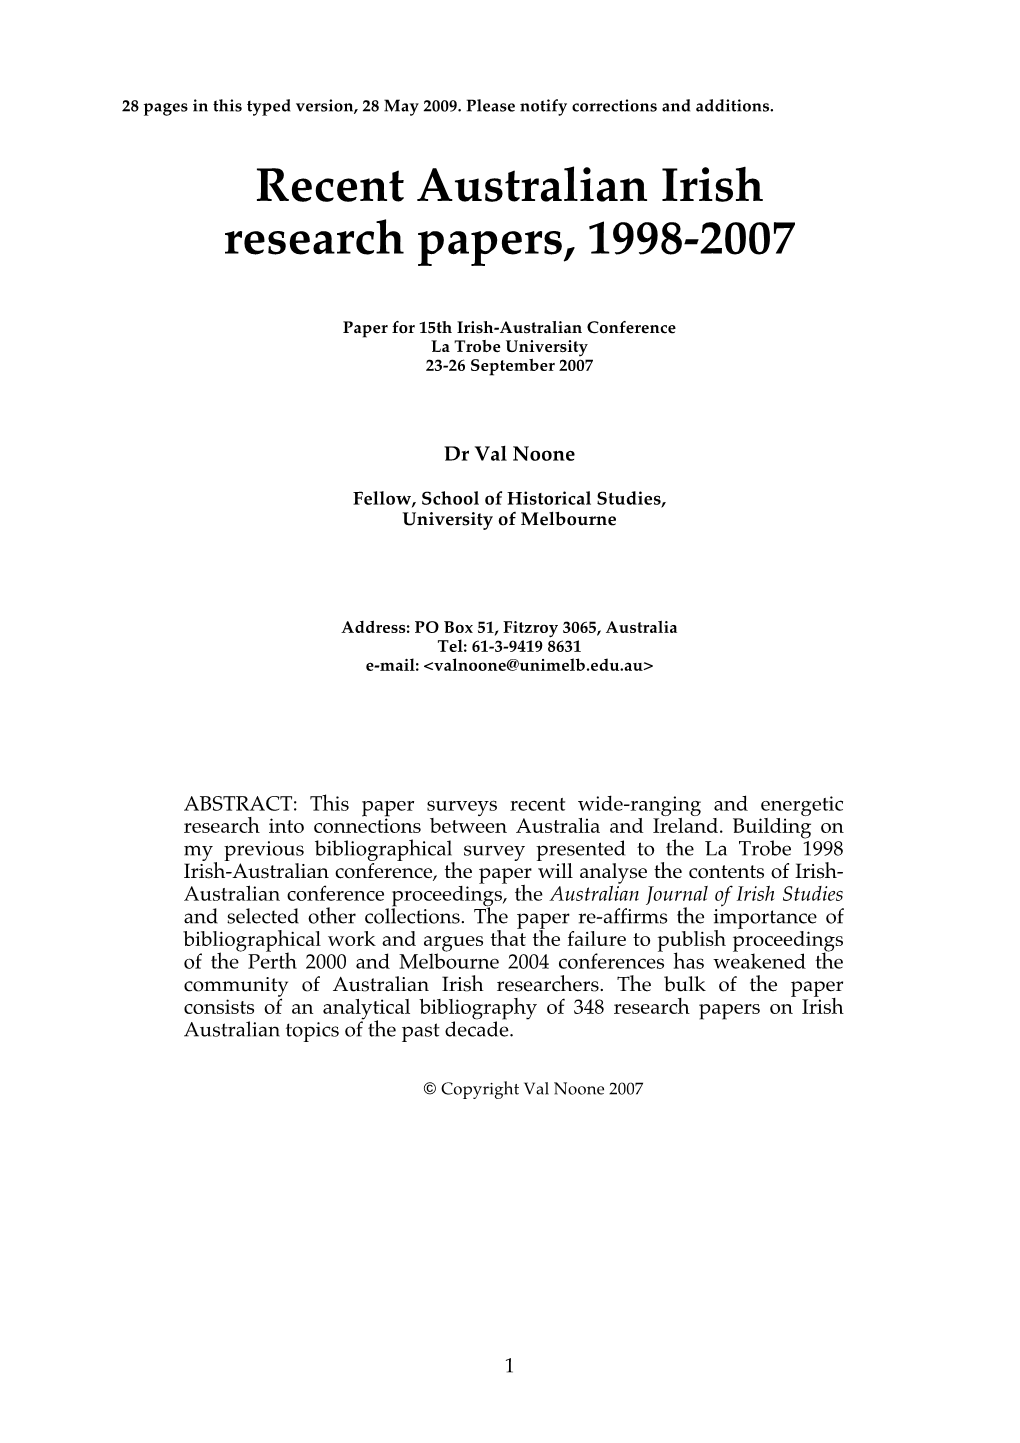 Recent Australian Irish Research Papers, 1998-2007